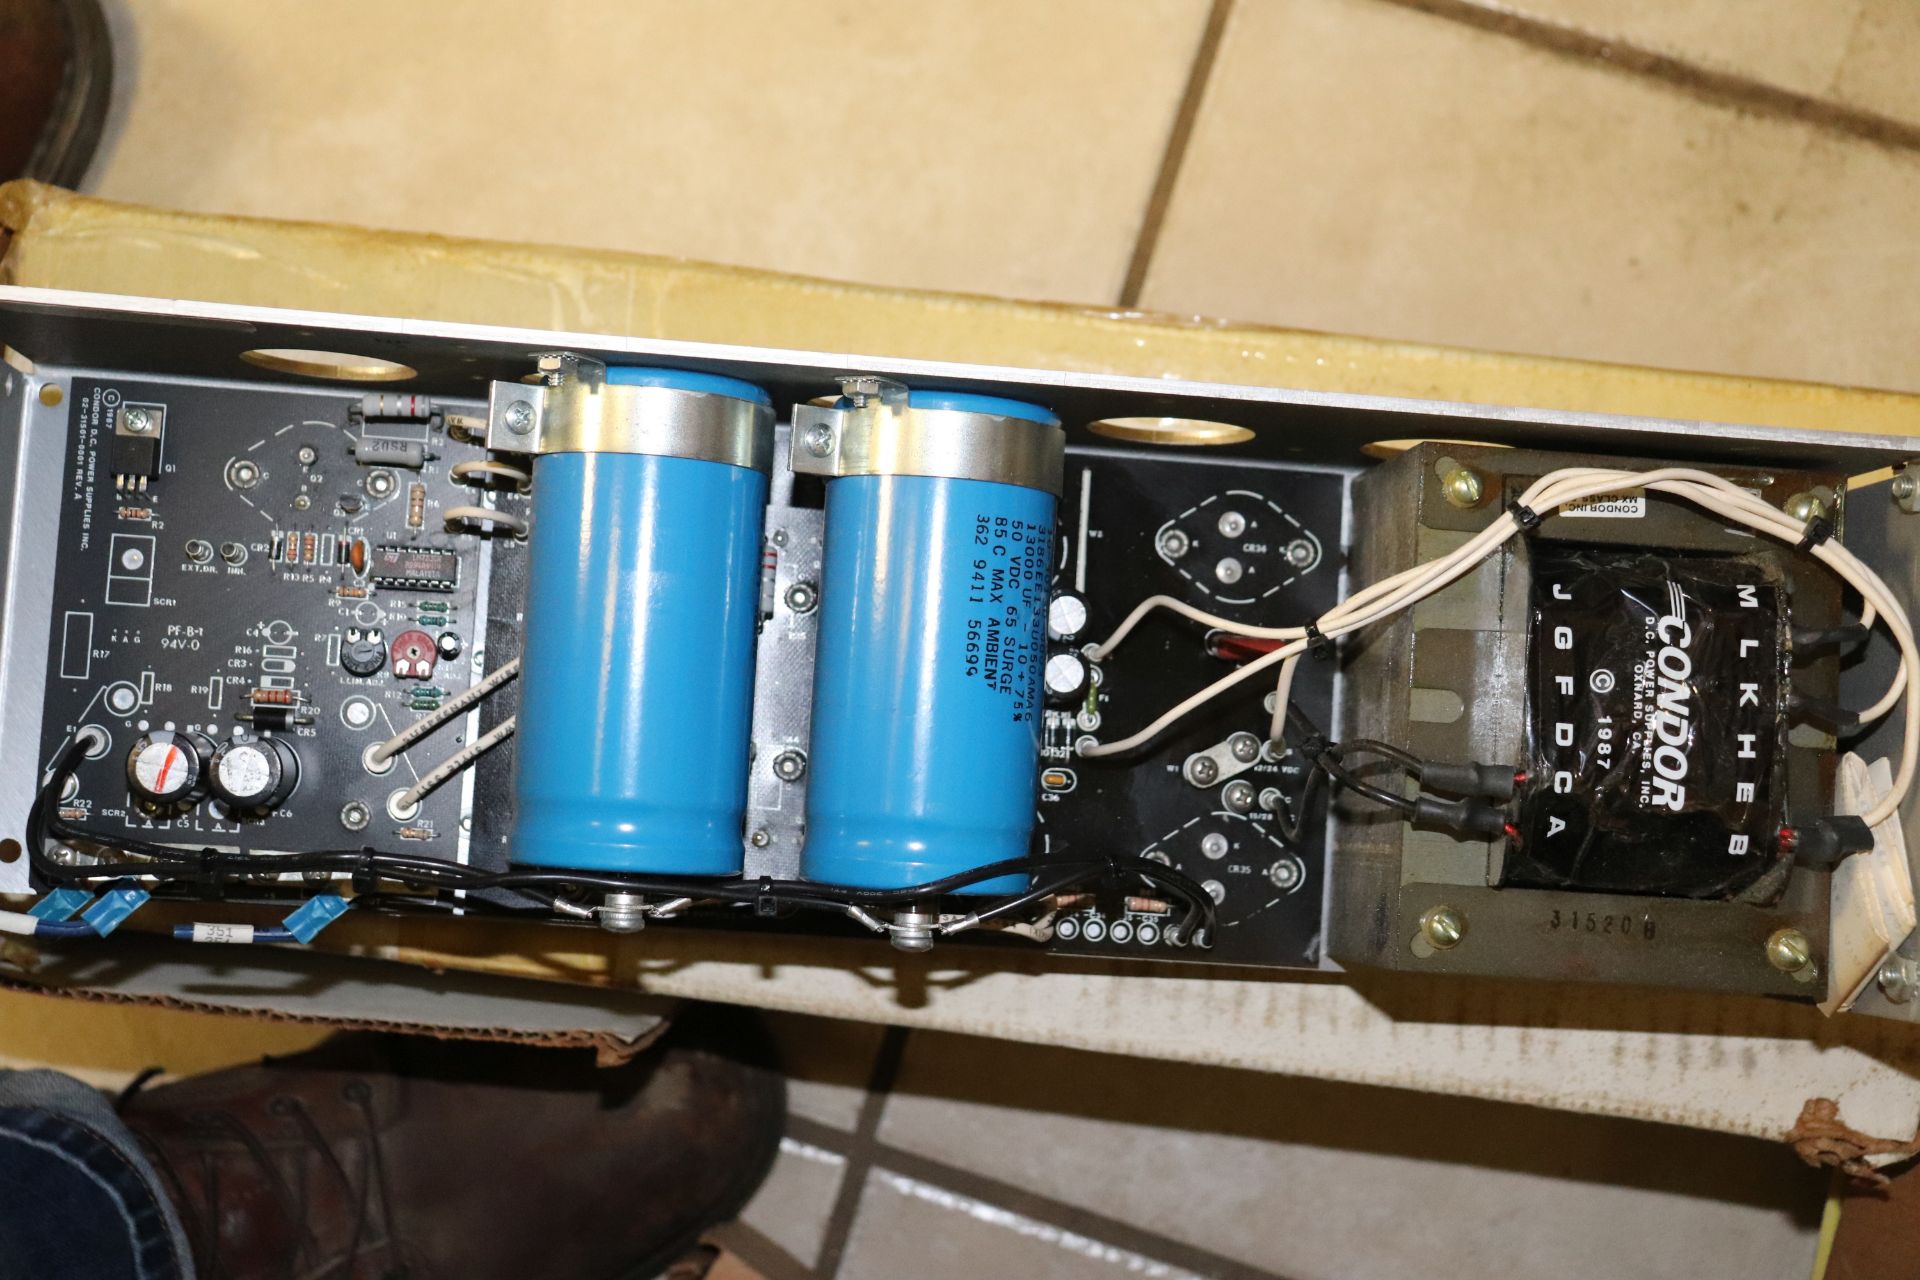 Condor DC power supply, model F24-12-A+ - Image 4 of 4